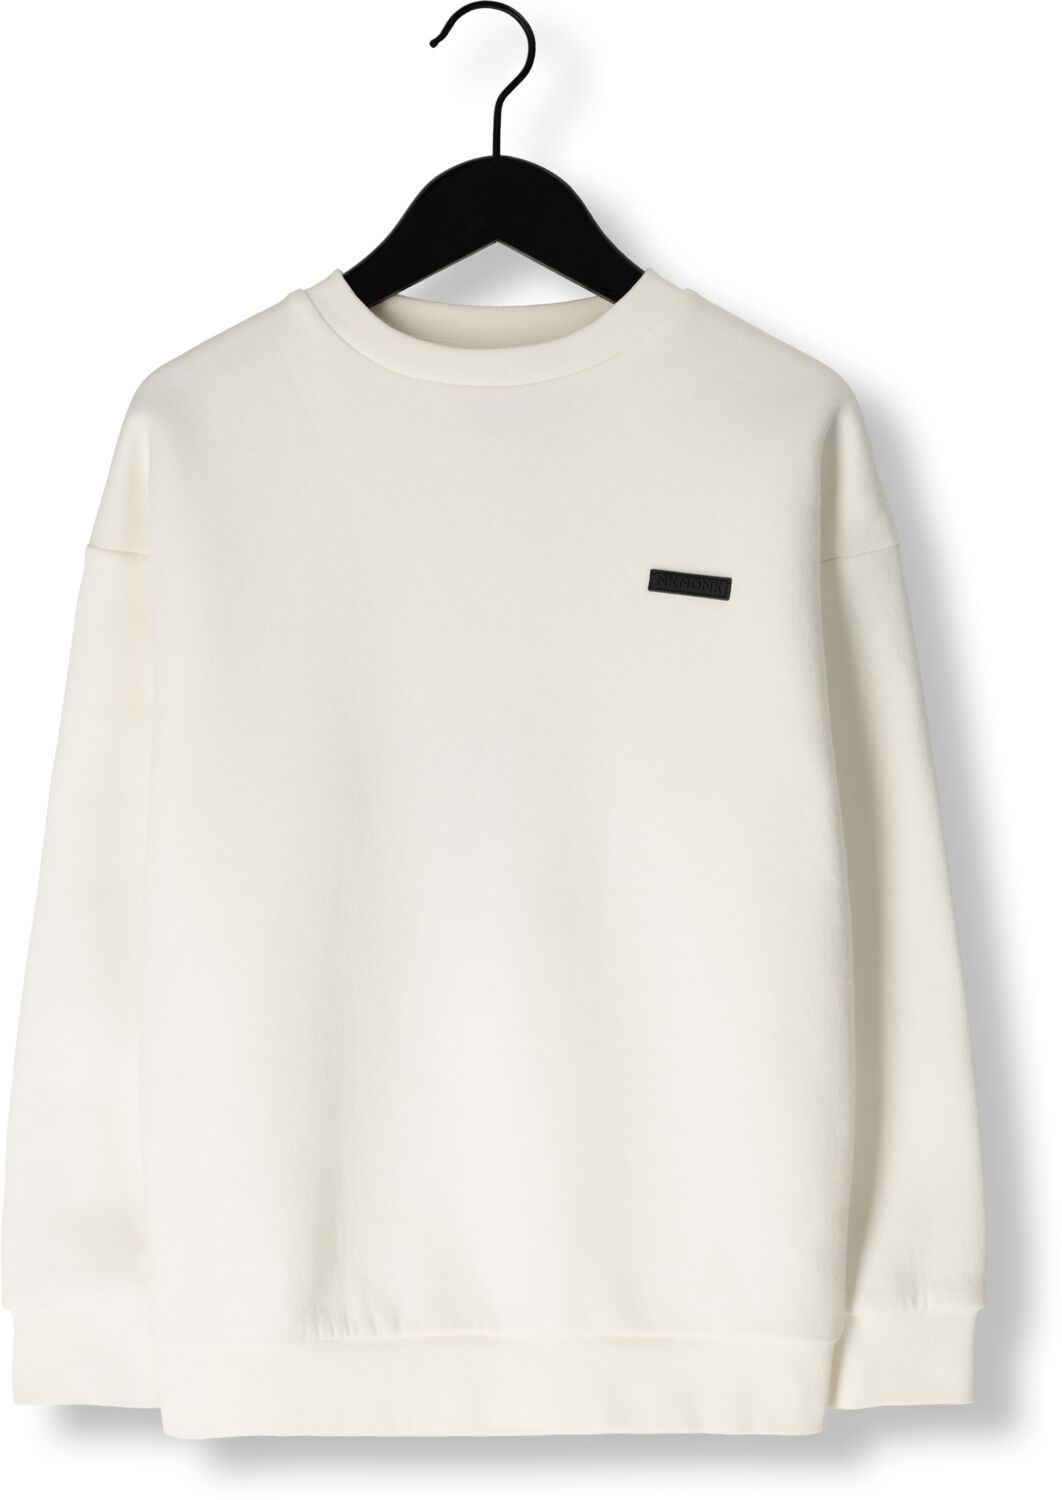 NIK&NIK sweater Palm met backprint offwhite Wit Backprint 140